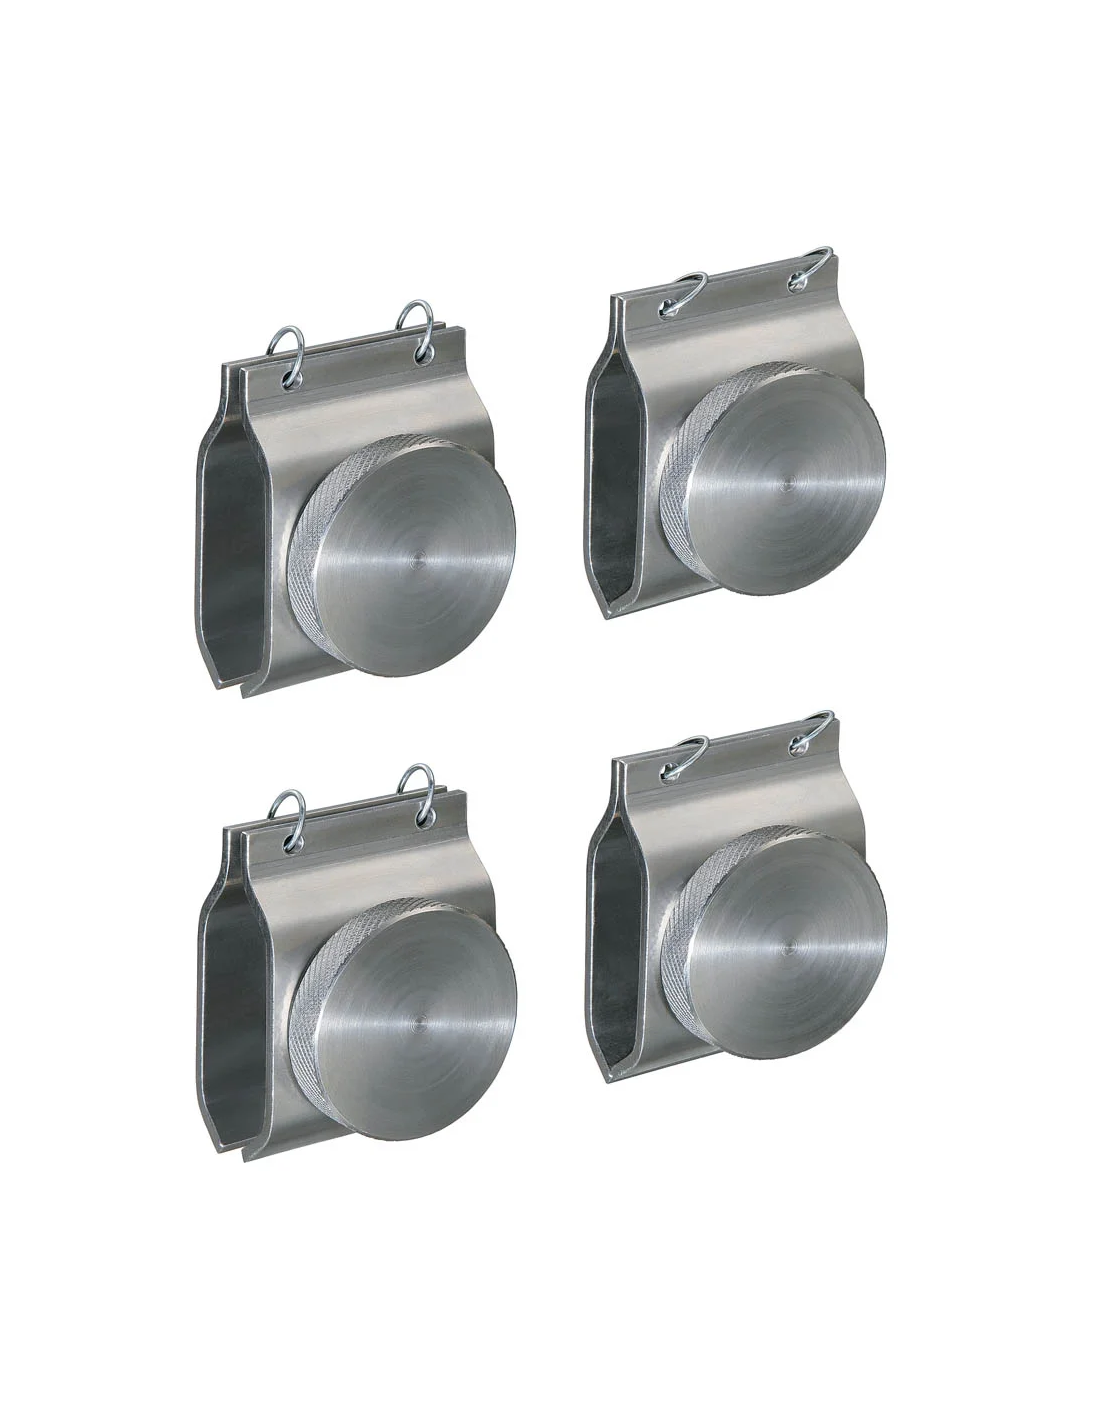 Stainless steel locking kit 4 latches